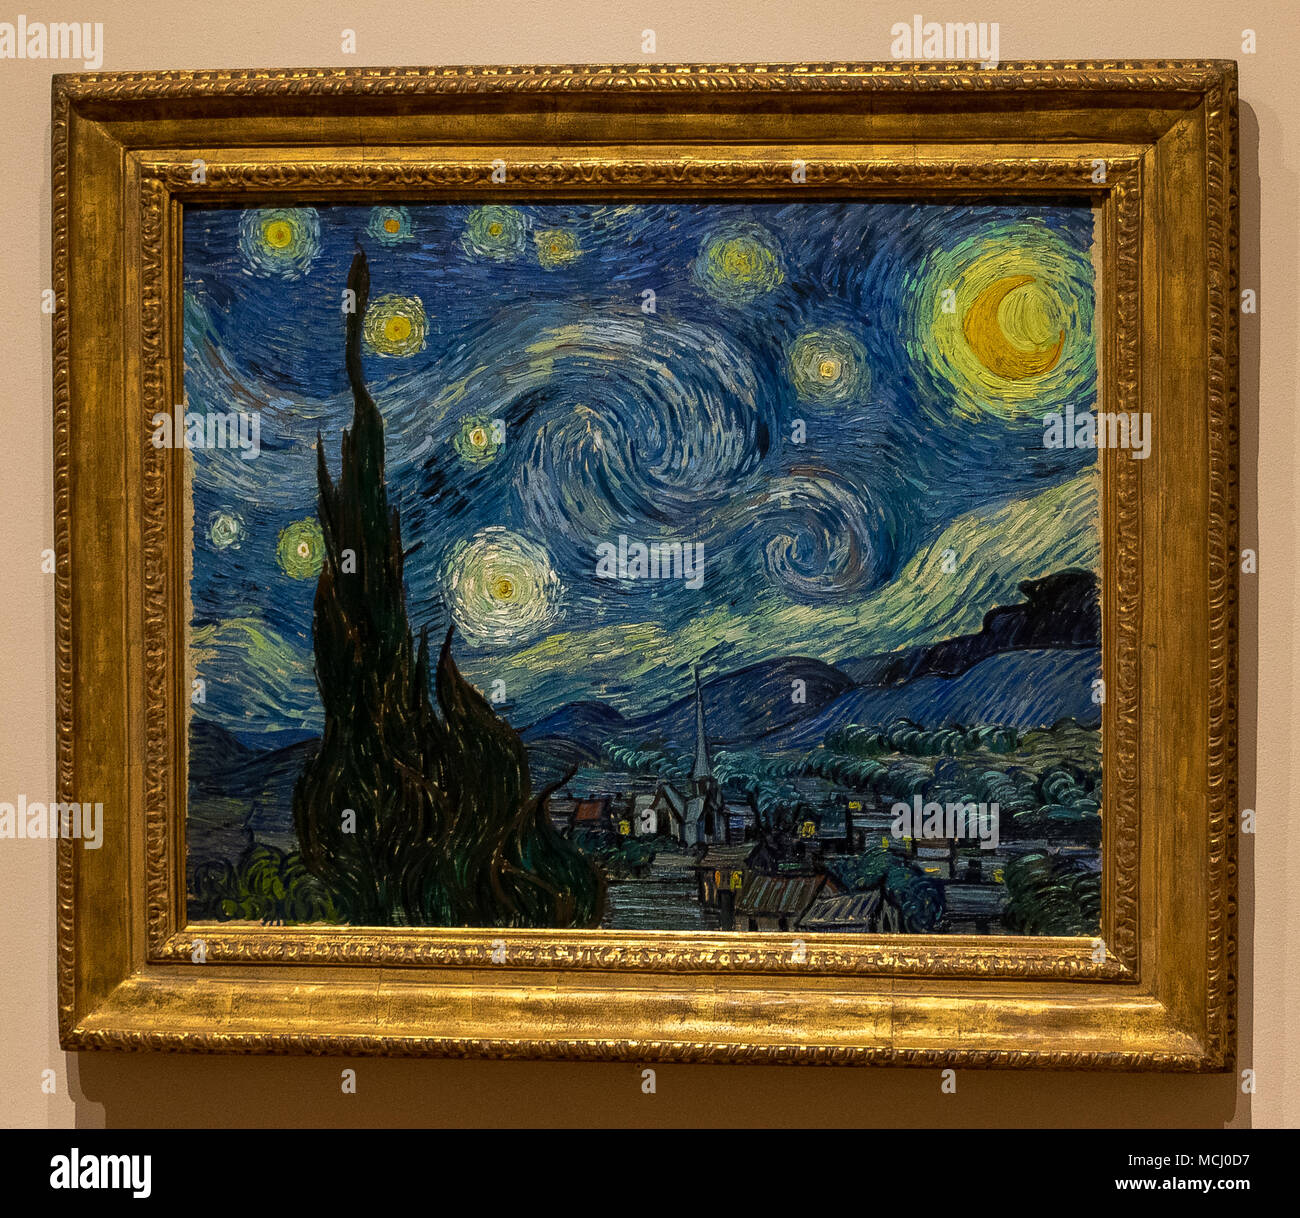 New York City MOMA - Starry Night, Vincent Van Gogh Stock Photo - Alamy